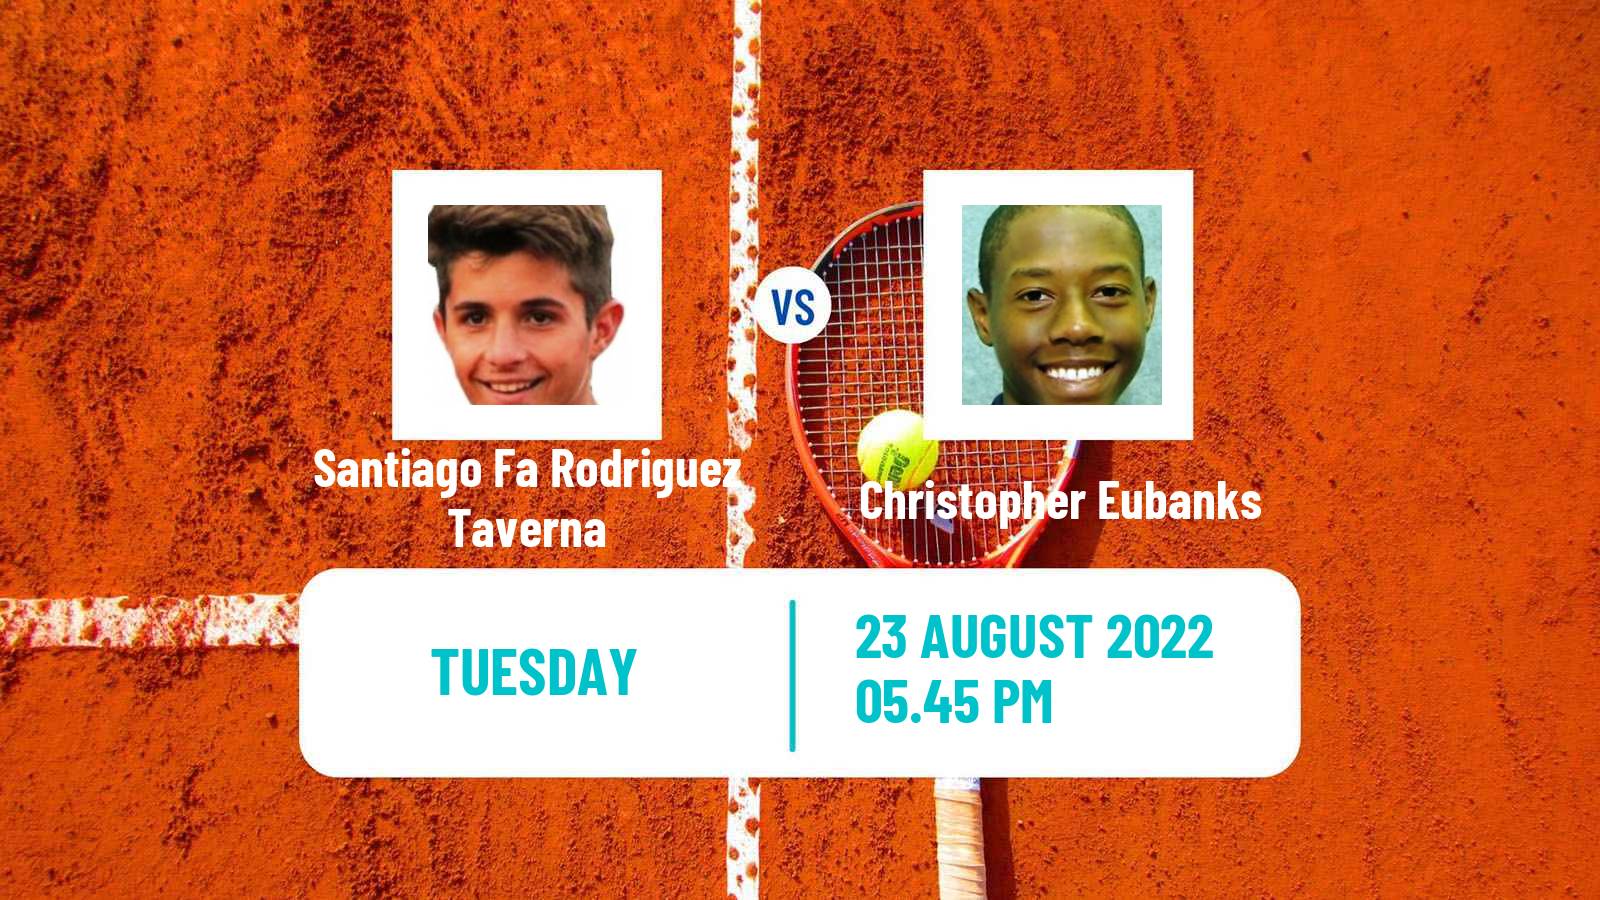 Tennis ATP US Open Santiago Fa Rodriguez Taverna - Christopher Eubanks